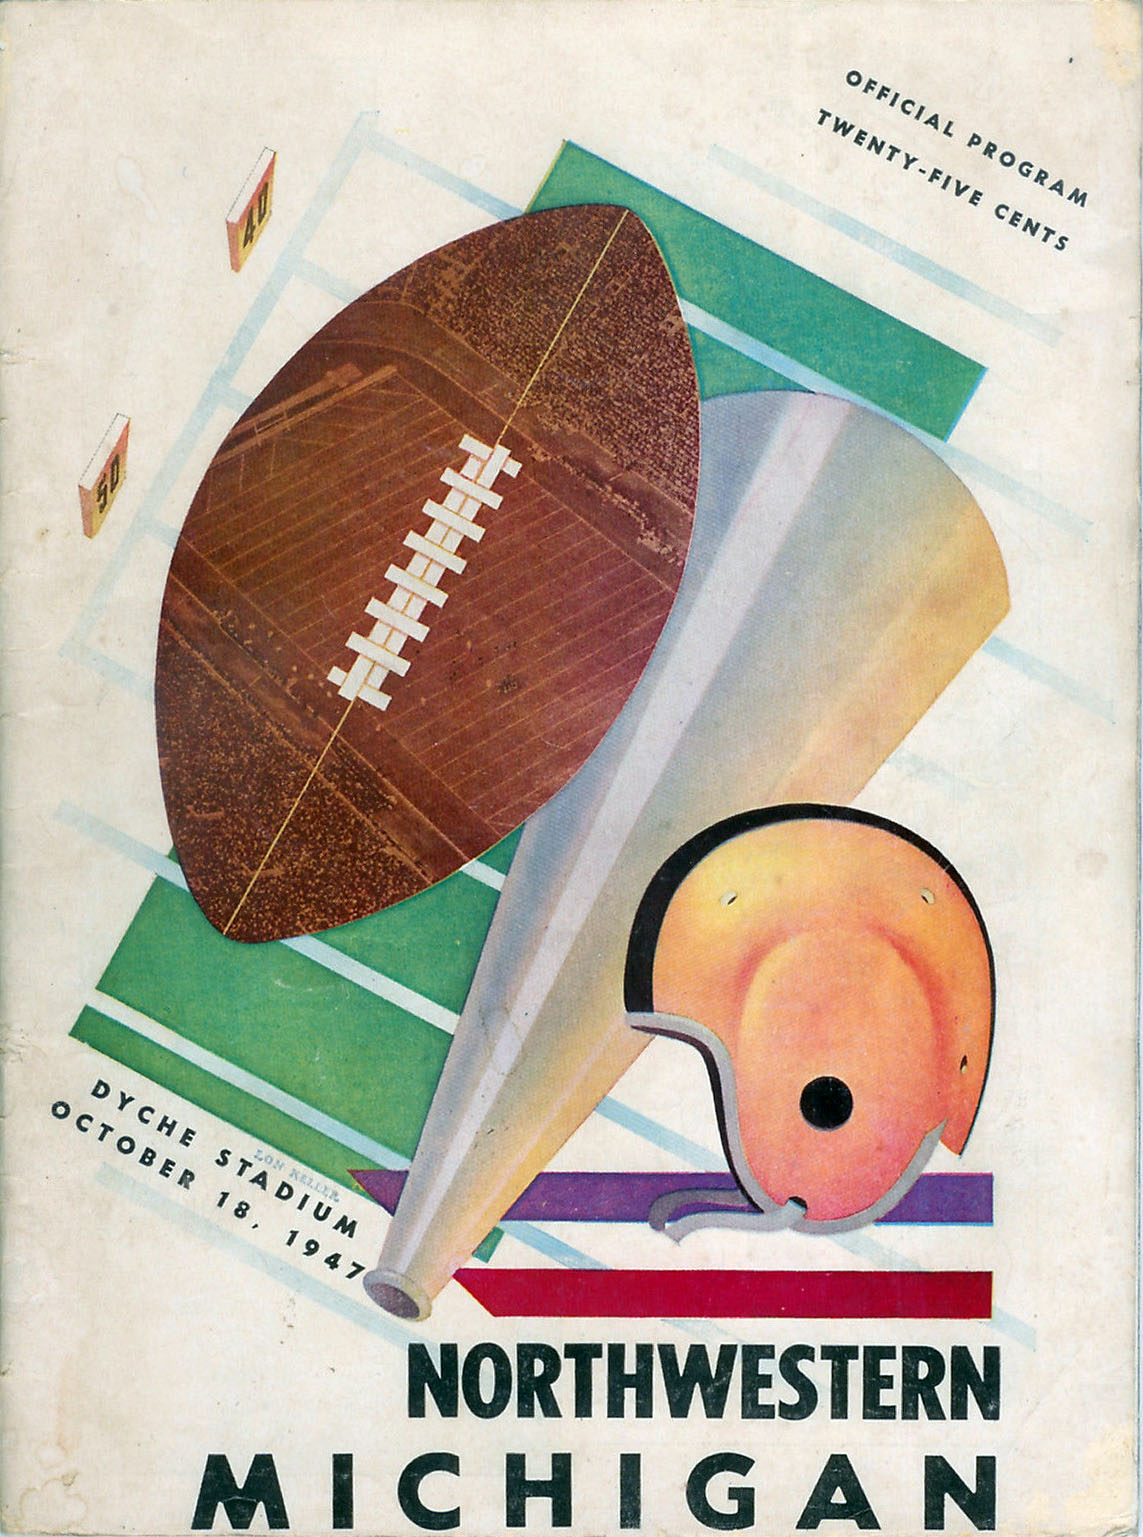 College Football Program: Northwestern Wildcats vs. Michigan Wolverines (October 18, 1947)